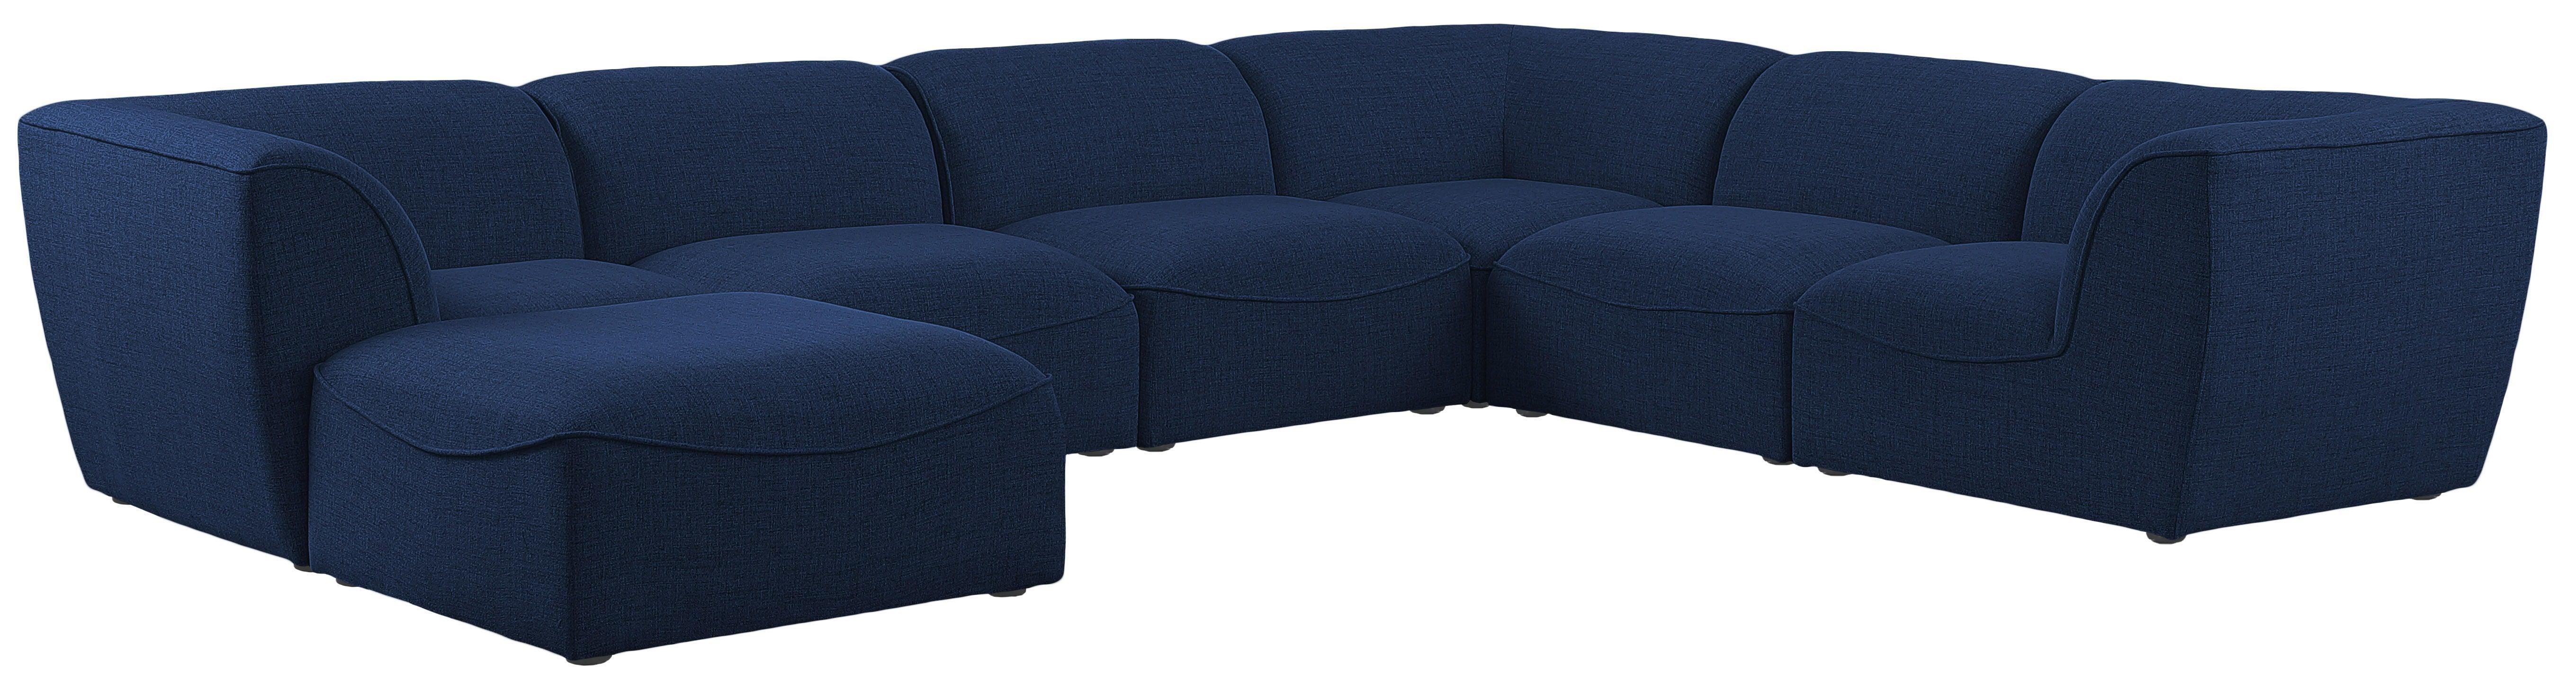 Meridian Furniture - Miramar - Modular Sectional 7 Piece - Navy - Fabric - 5th Avenue Furniture